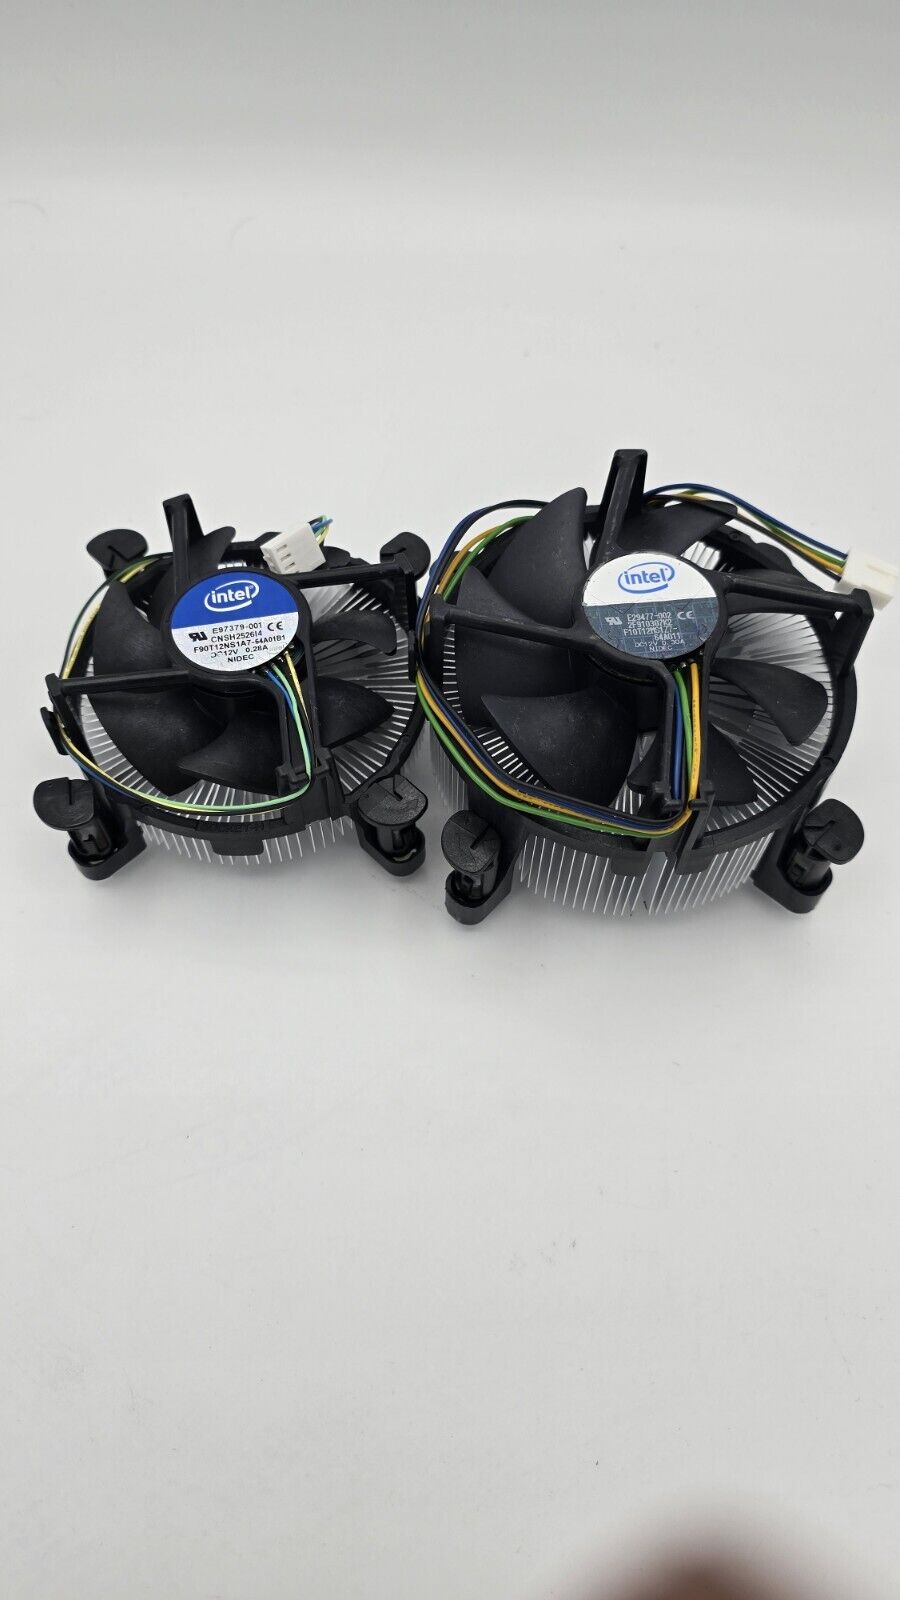 Intel 4Pin CPU Heatsink Cooling Fan E97379-001/E29477-002 Set